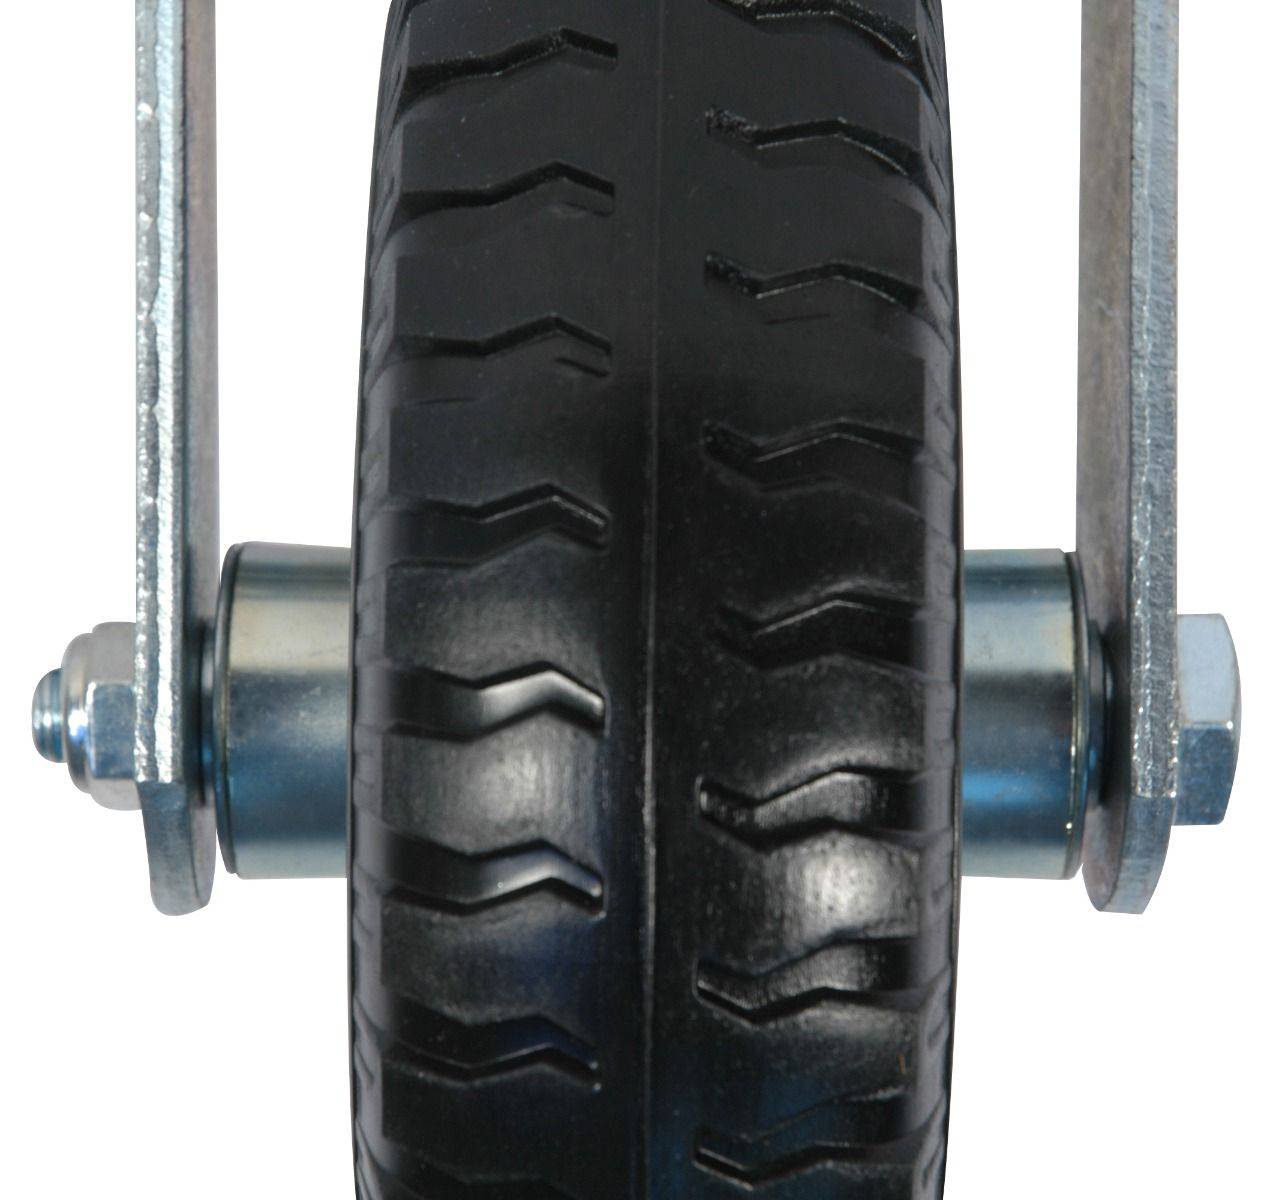 8" Rigid Plate Caster w/ Flat Free Semi-Pneumatic Wheel - DH International